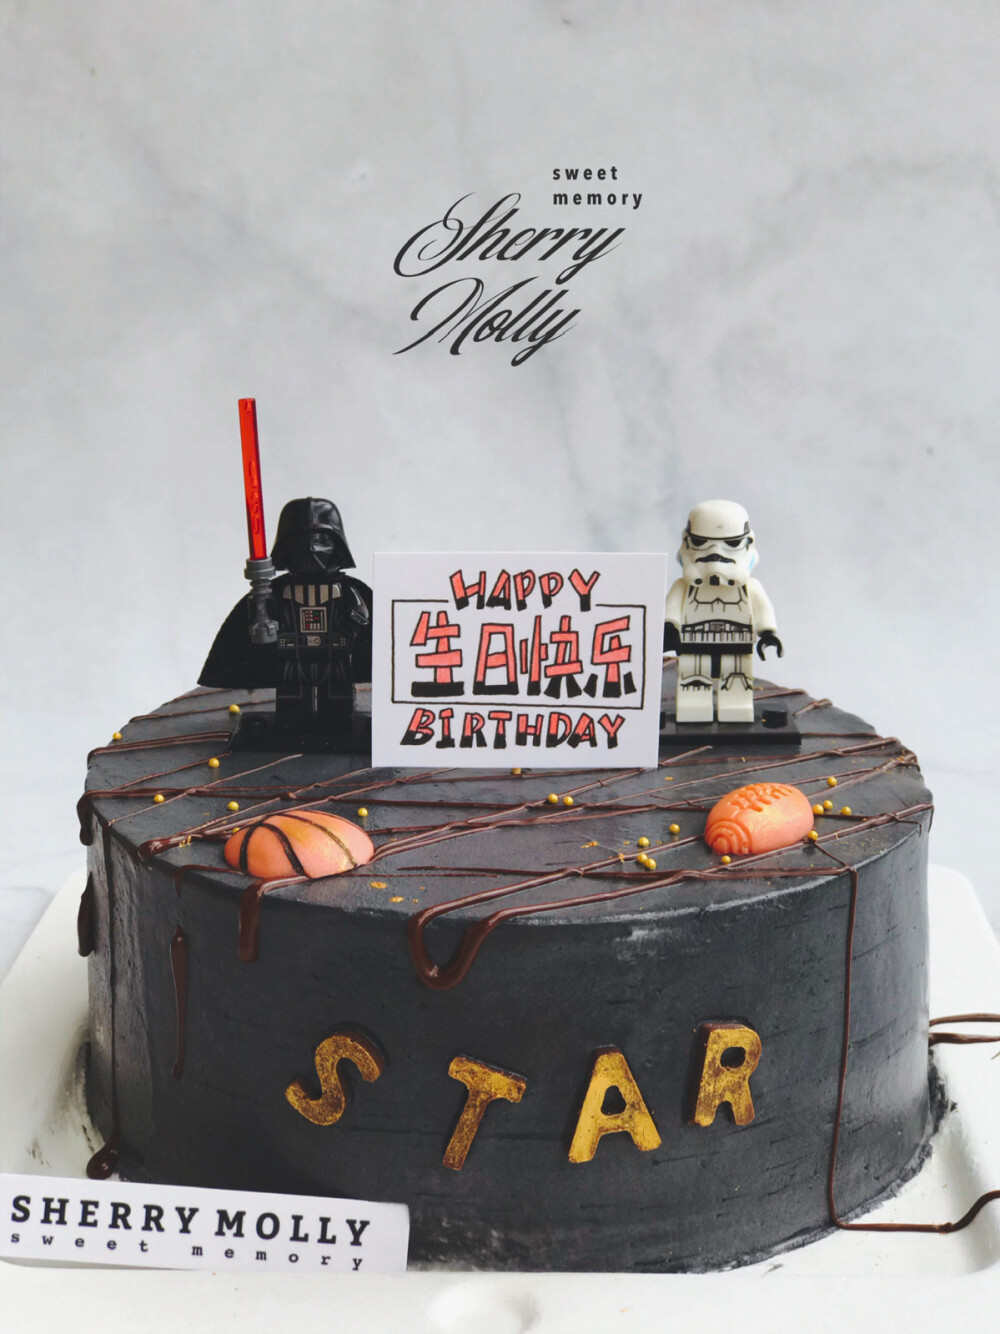 #SHERRY Molly家の下午茶#—『原味cake』给大男孩儿得生日cake～暗黑系 星战主题 篮球橄榄球齐上阵 超酷的cake一起庆祝生日呀～